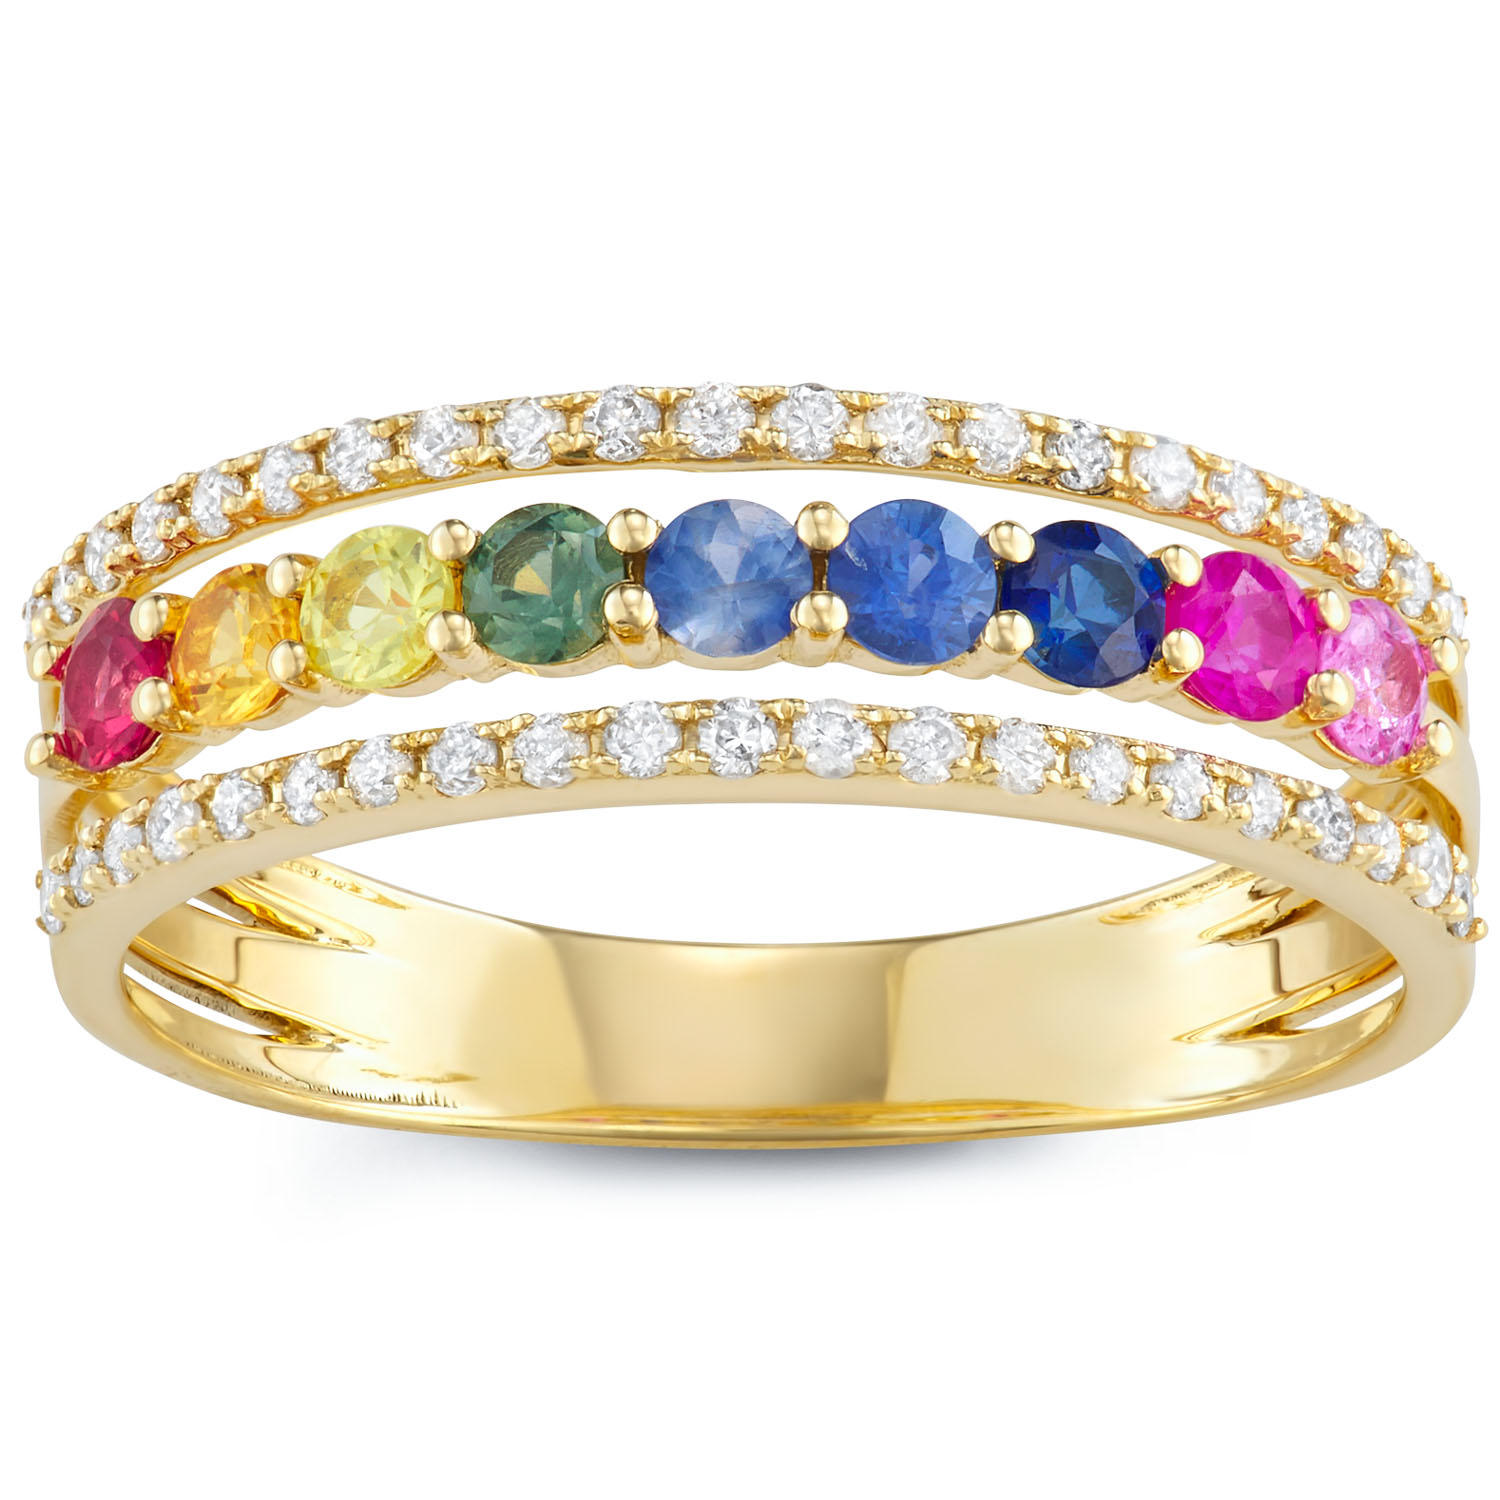 Rainbow Sapphire and Diamond Ring in 14K Yellow Gold 6